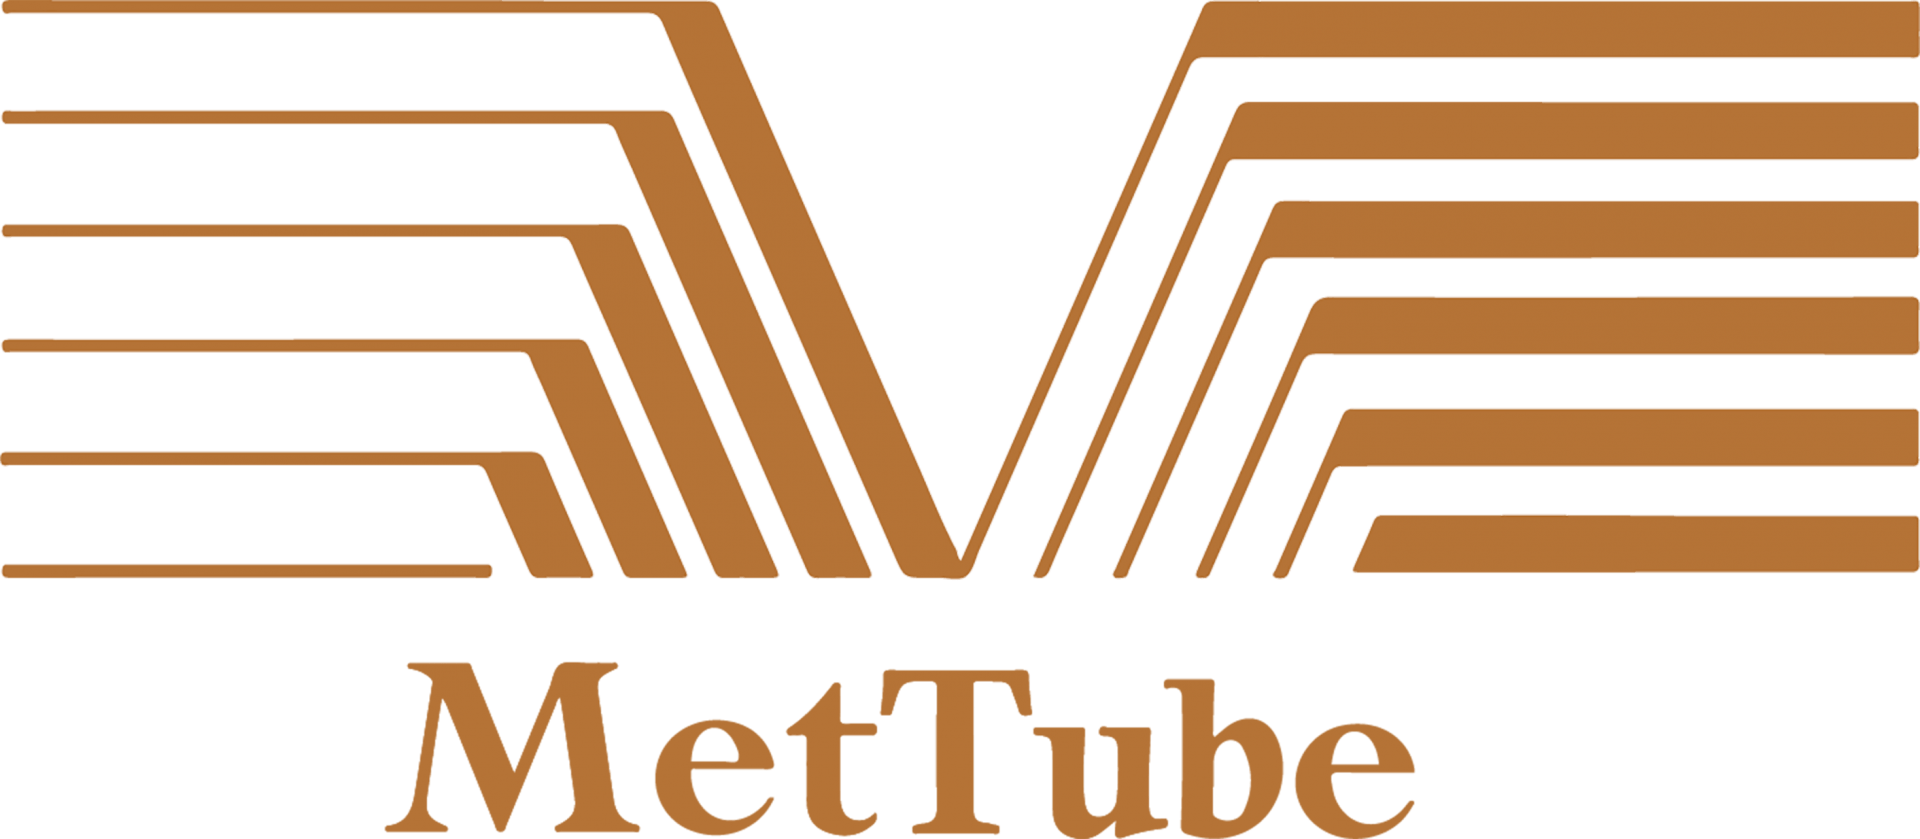 MetTube_logo_copper